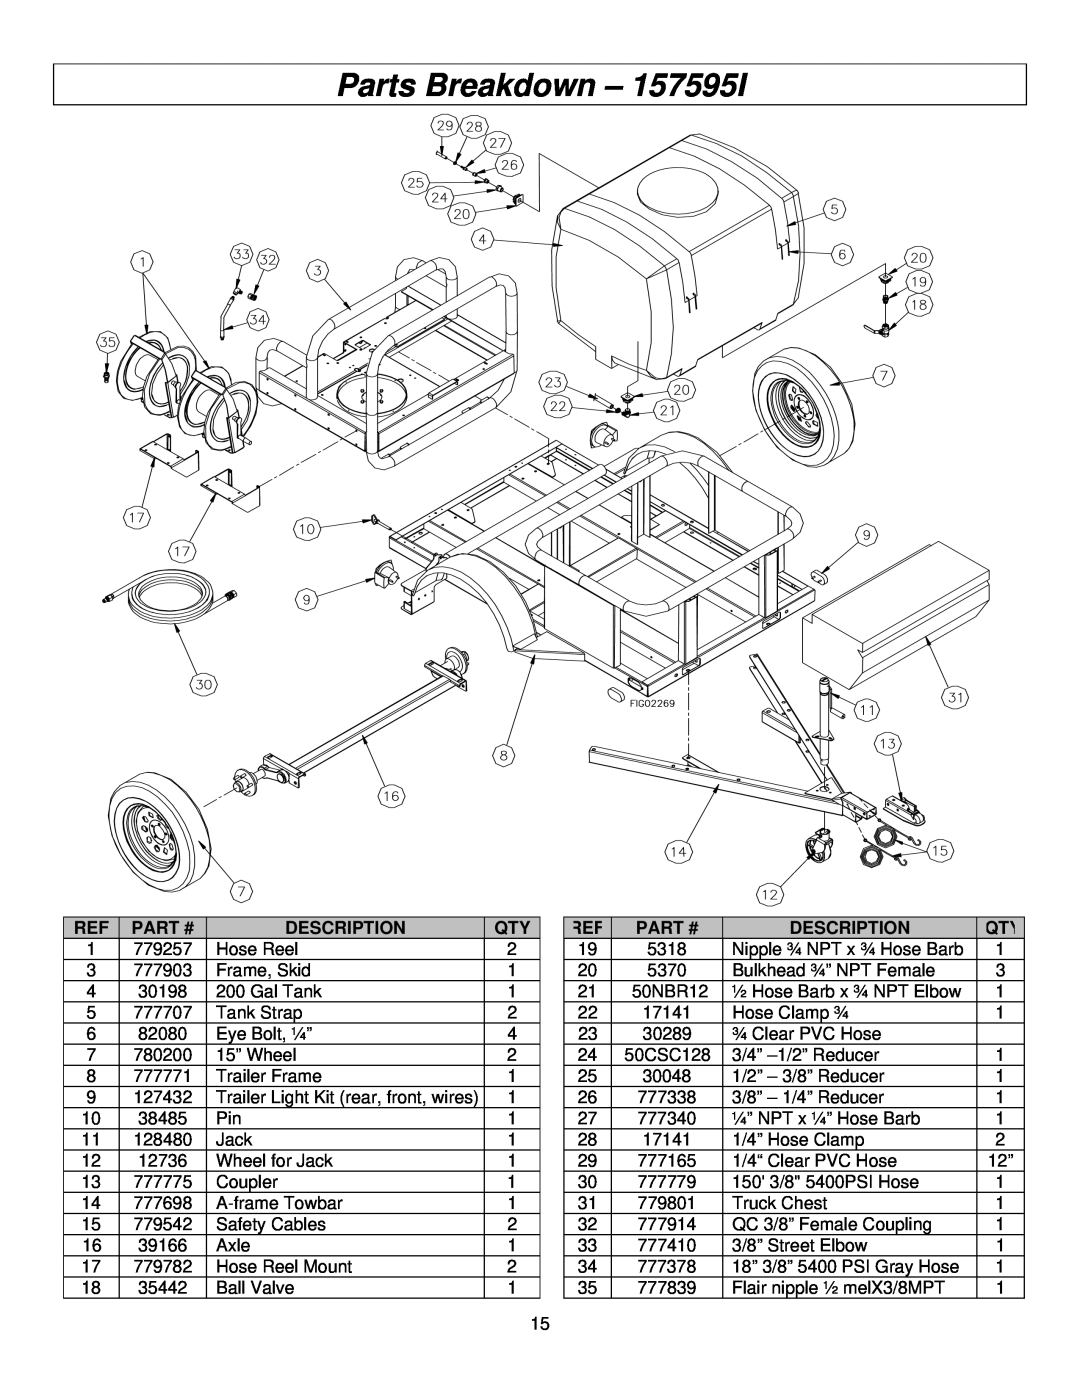 North Star M157594I specifications Parts Breakdown, Part #, Description 